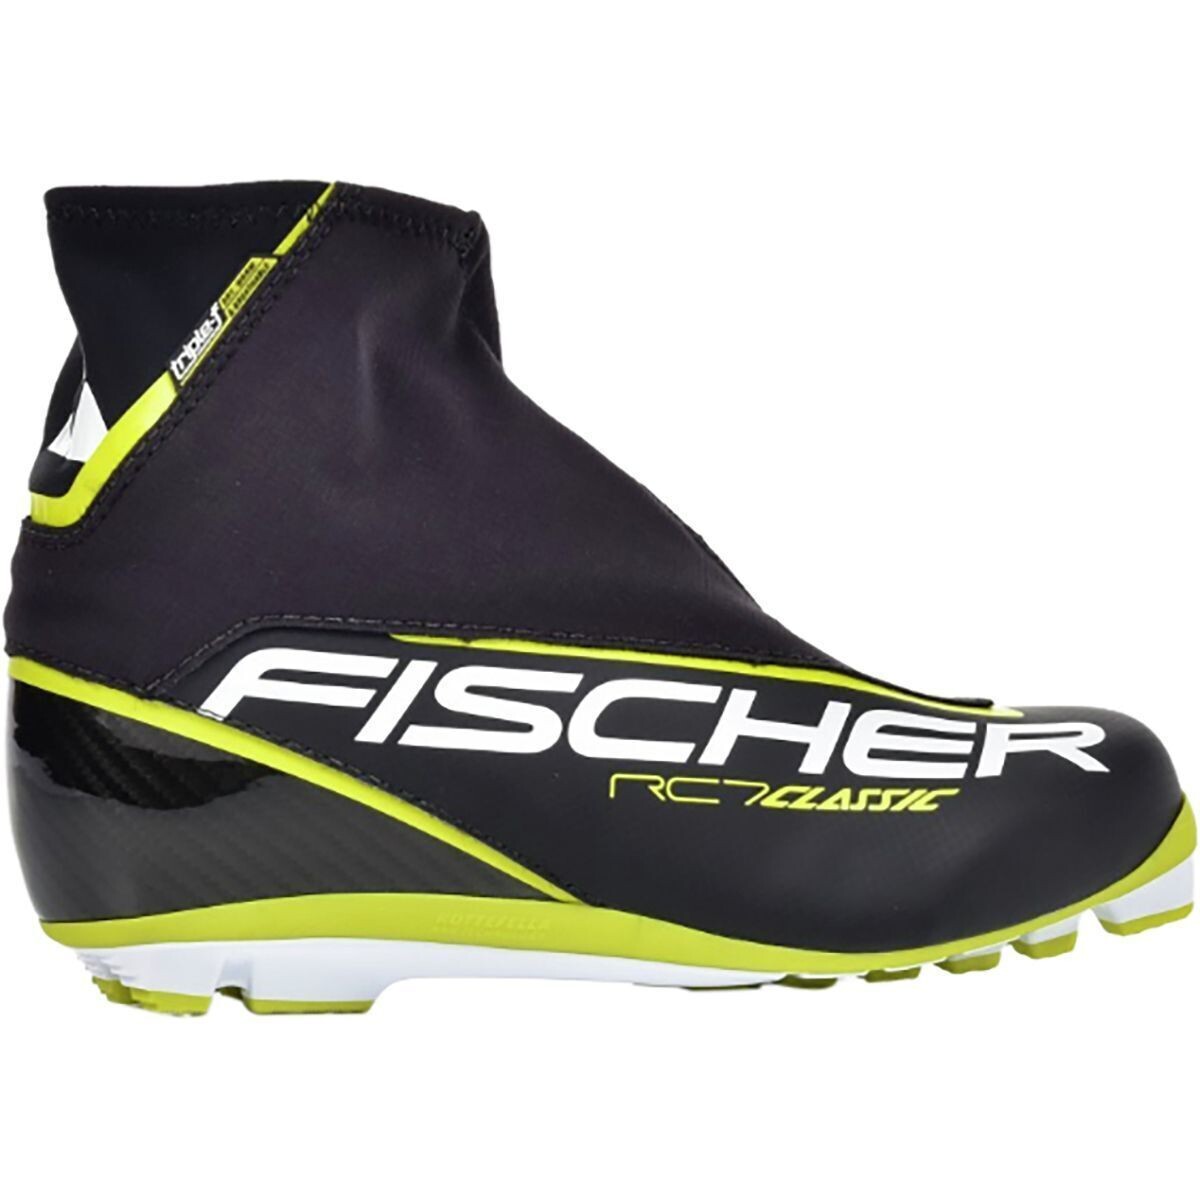 FISCHER RC7 CLASSIC SKI BOOT 17/18 UNISEX, Size: 46